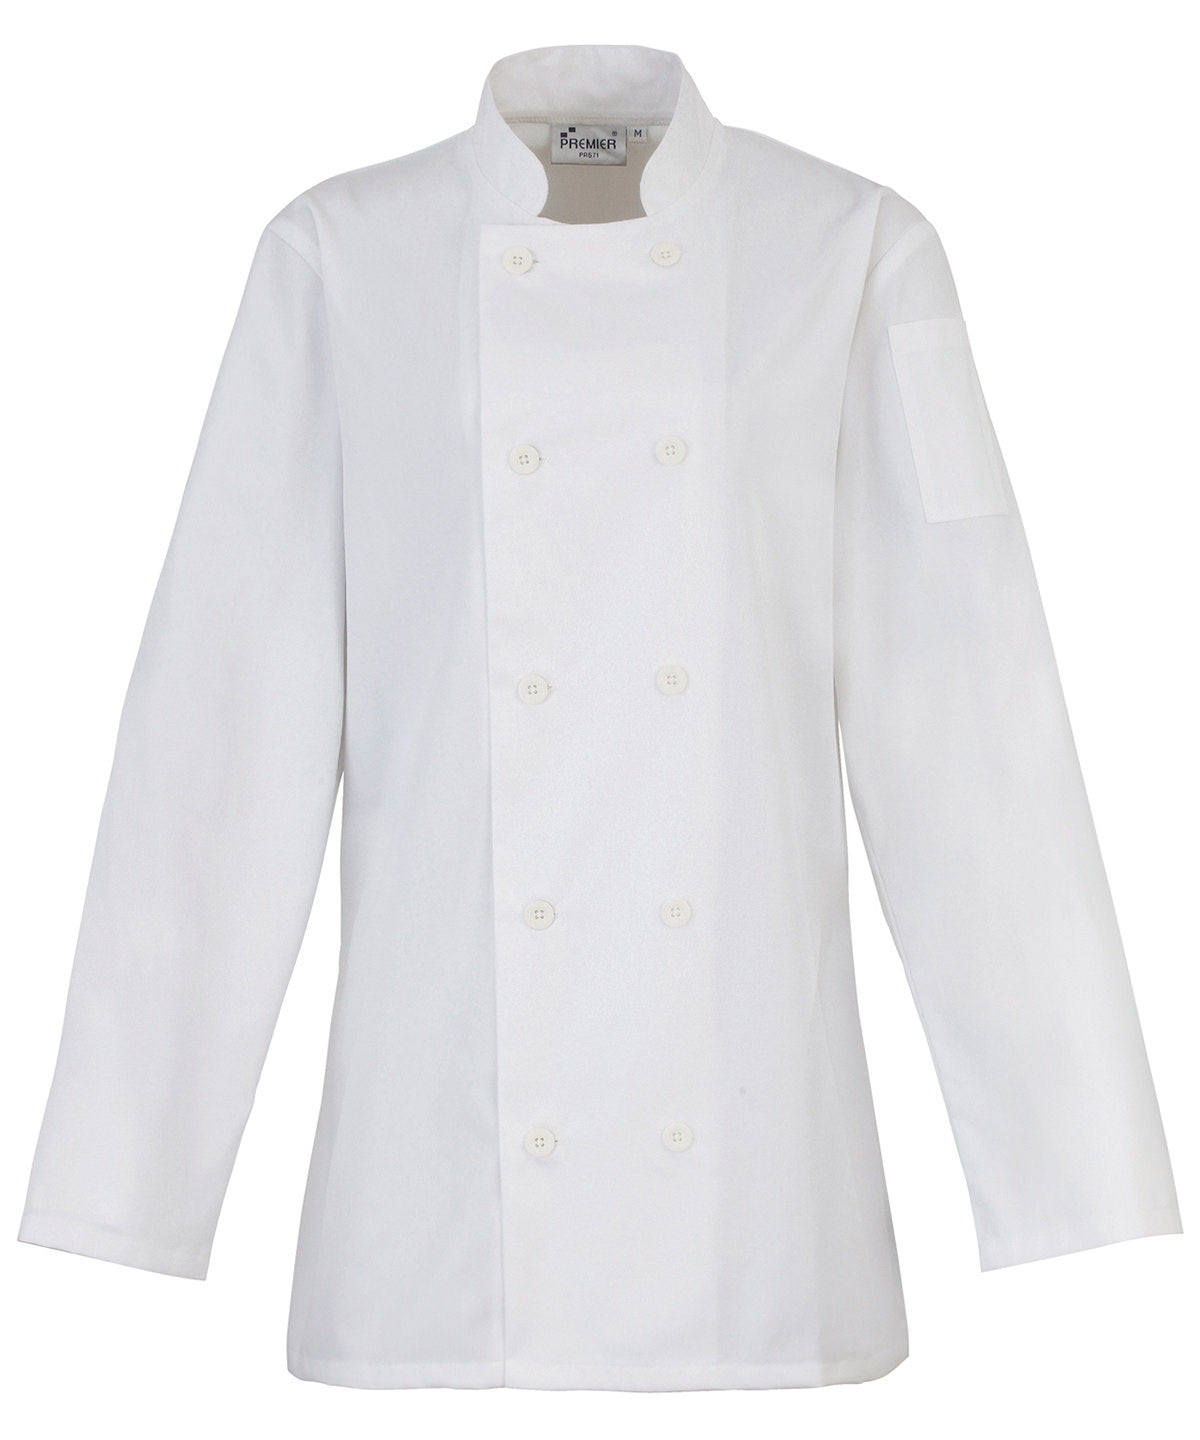 Kokkajakkar - Women's Long Sleeve Chef's Jacket